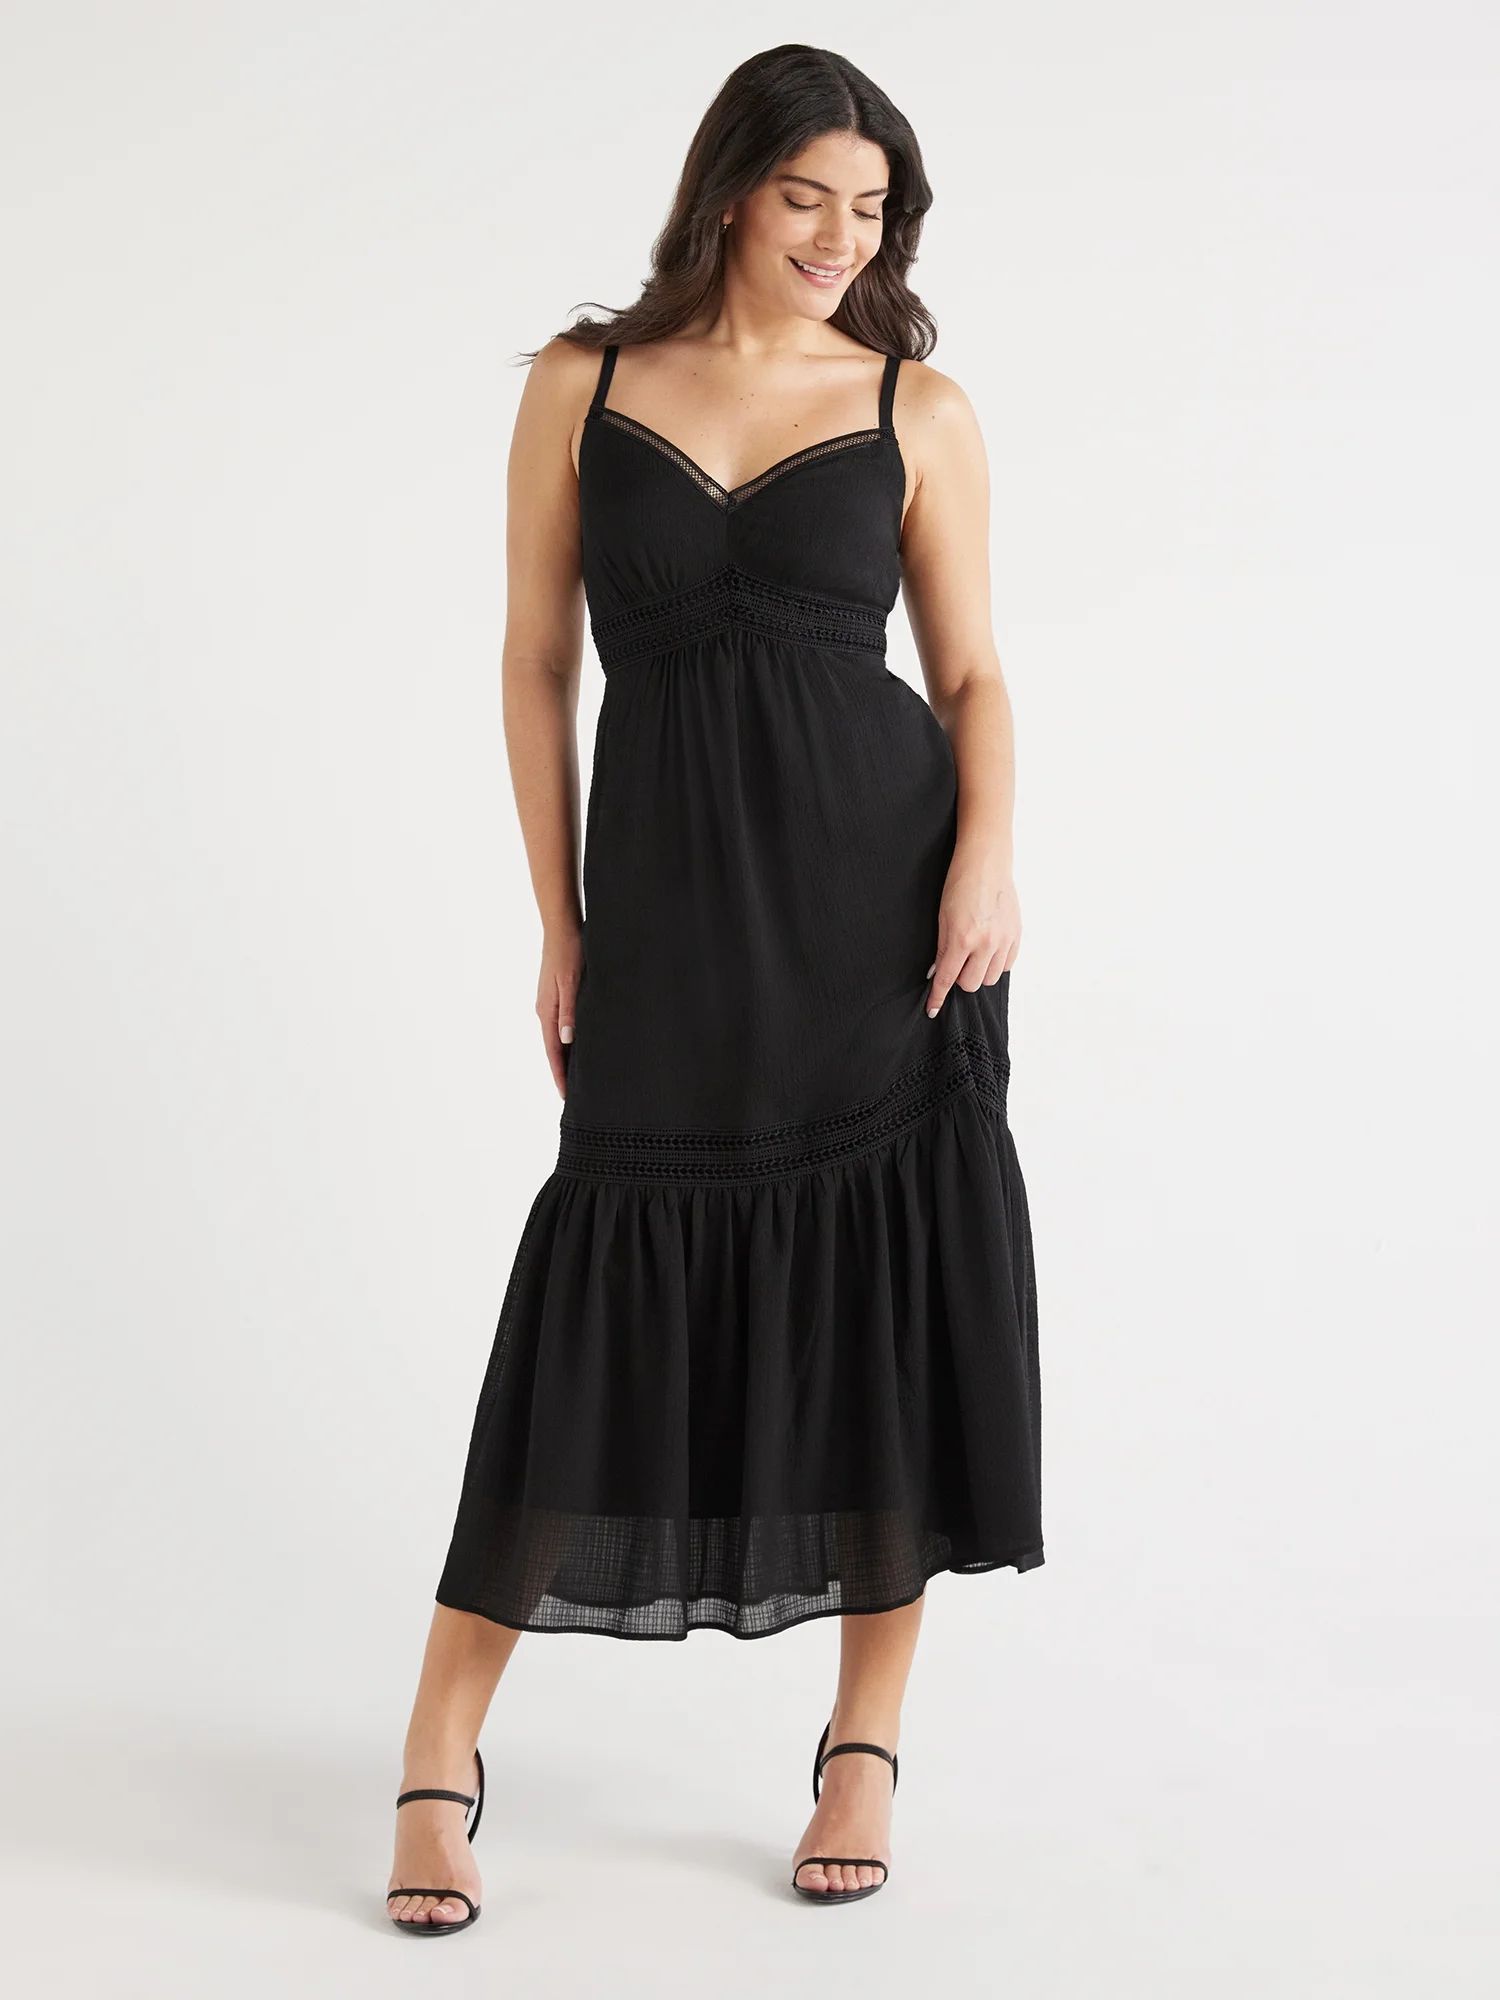 Sofia Jeans Women's Lace Trim Maxi Dress, Mid Calf Length, Sizes XS-XXXL | Walmart (US)